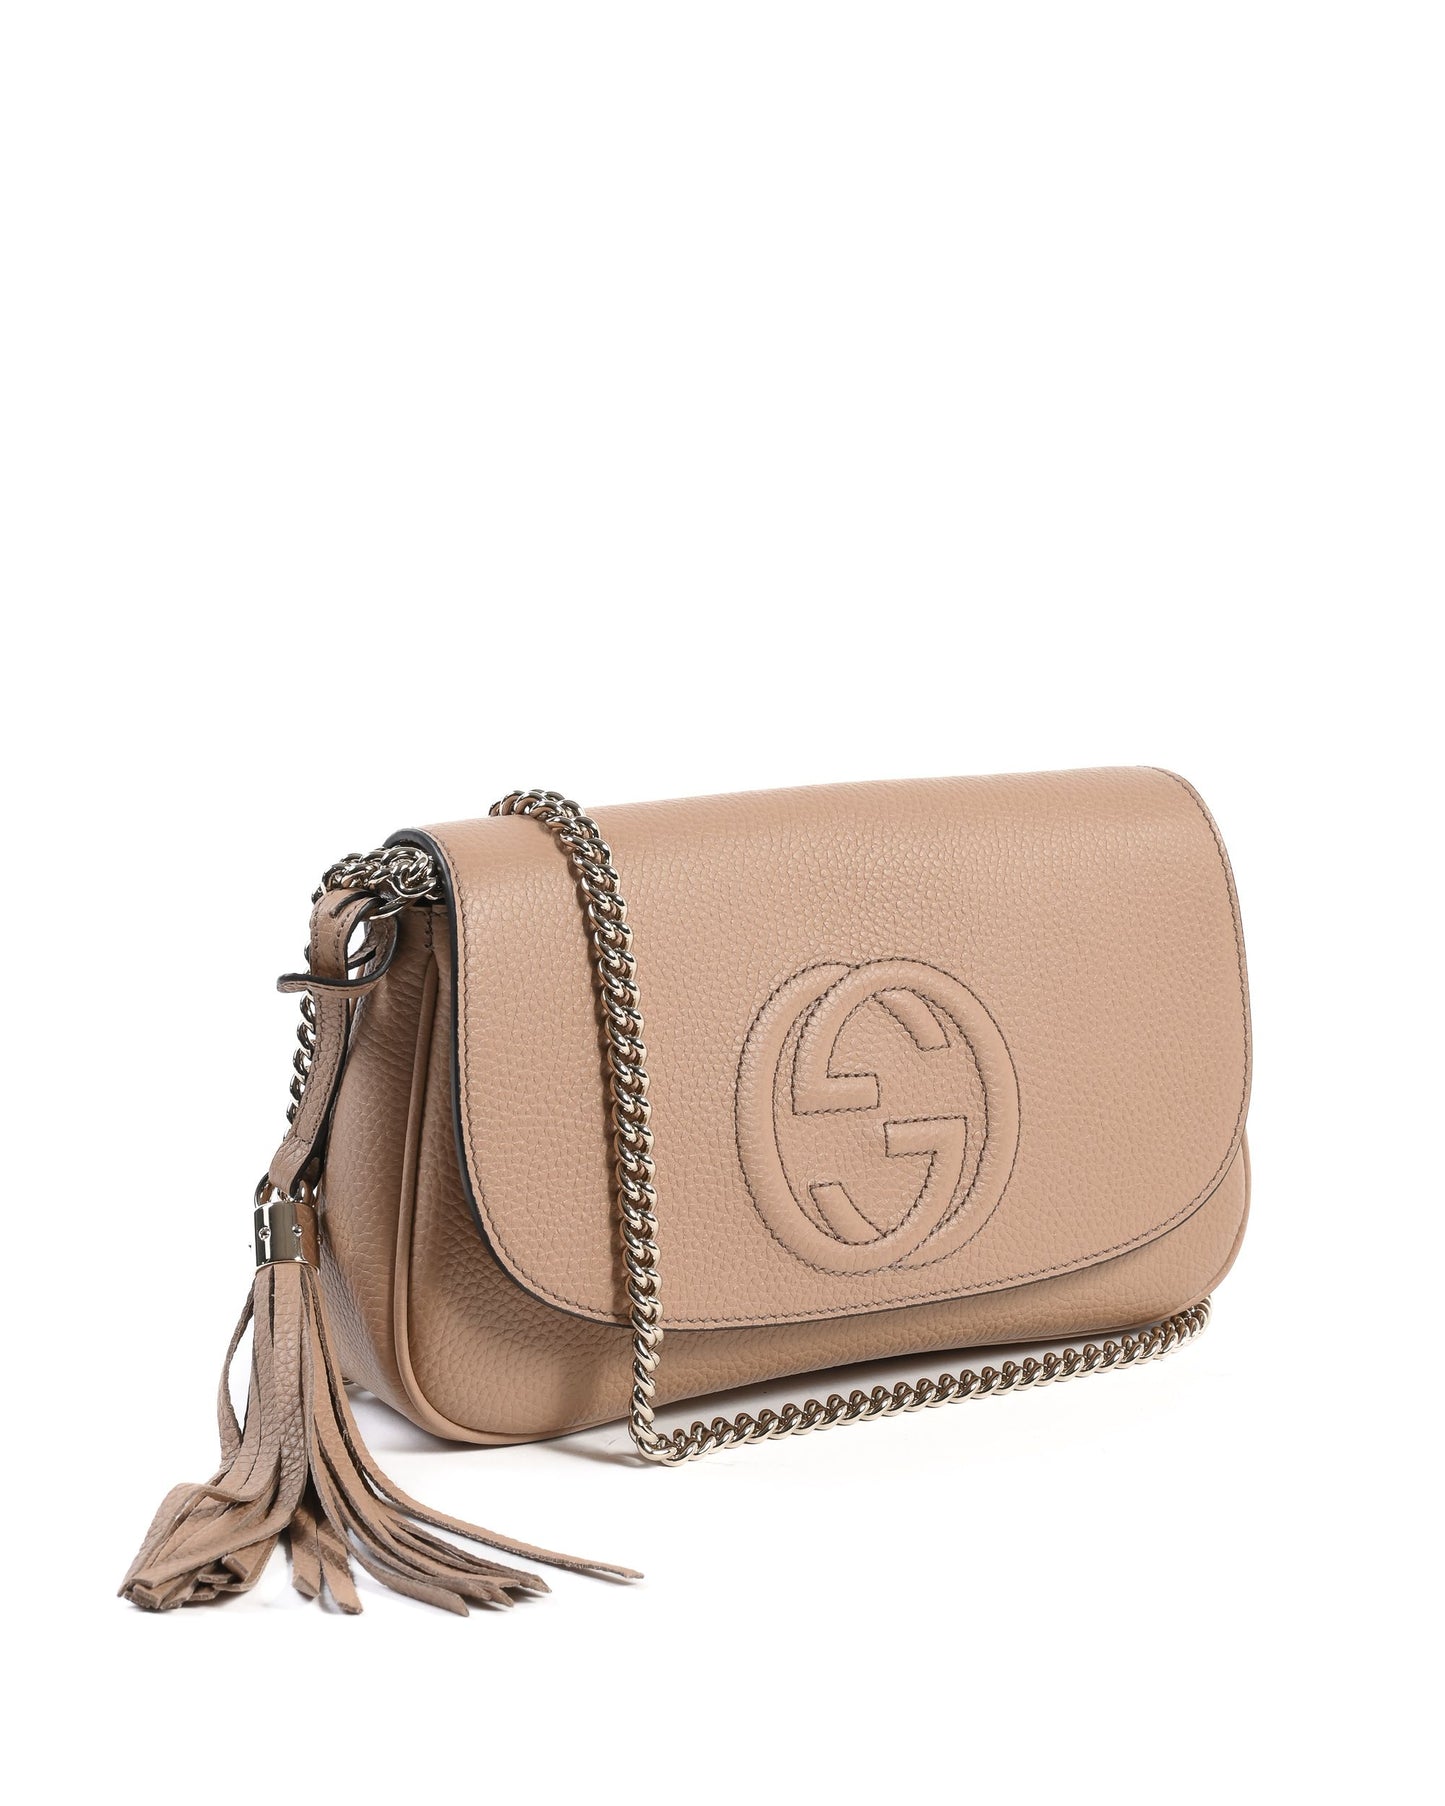 Gucci Soft leather cross body Soho bag 536224 A7M0G 2754